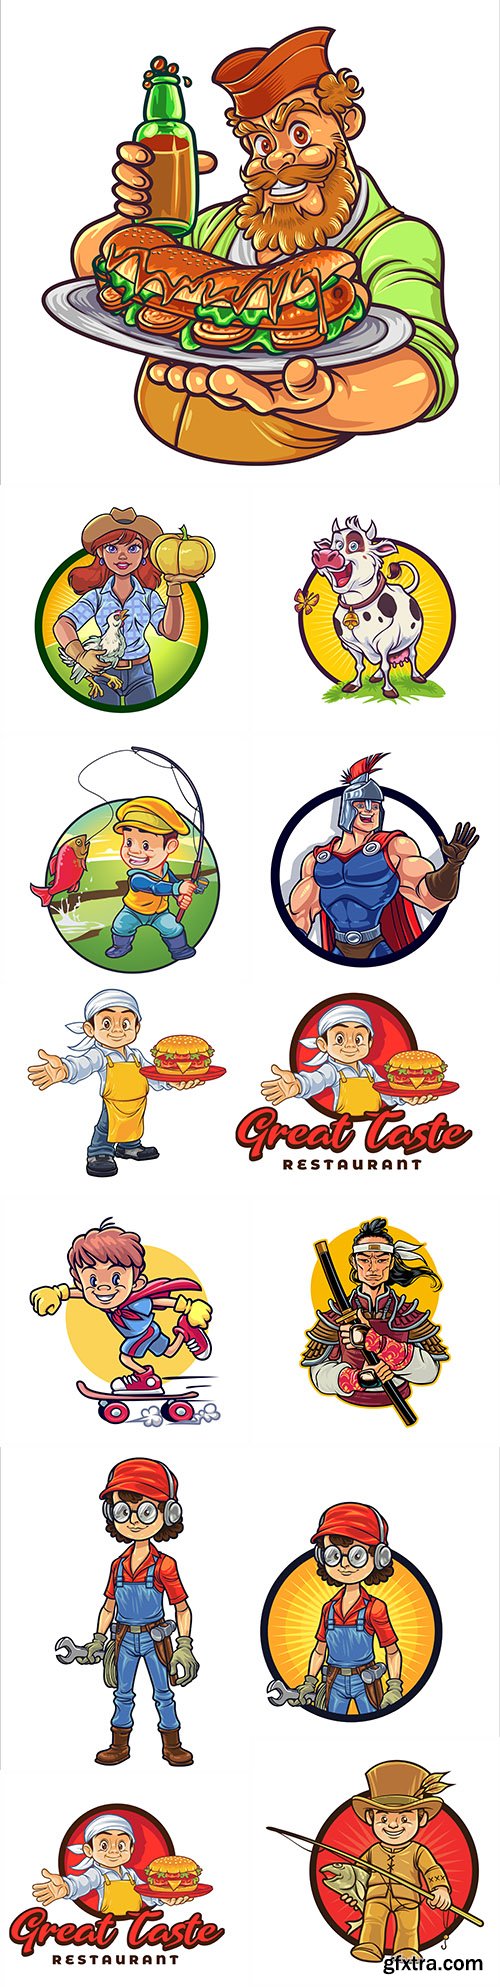 Cartoon characters different professions design emblems